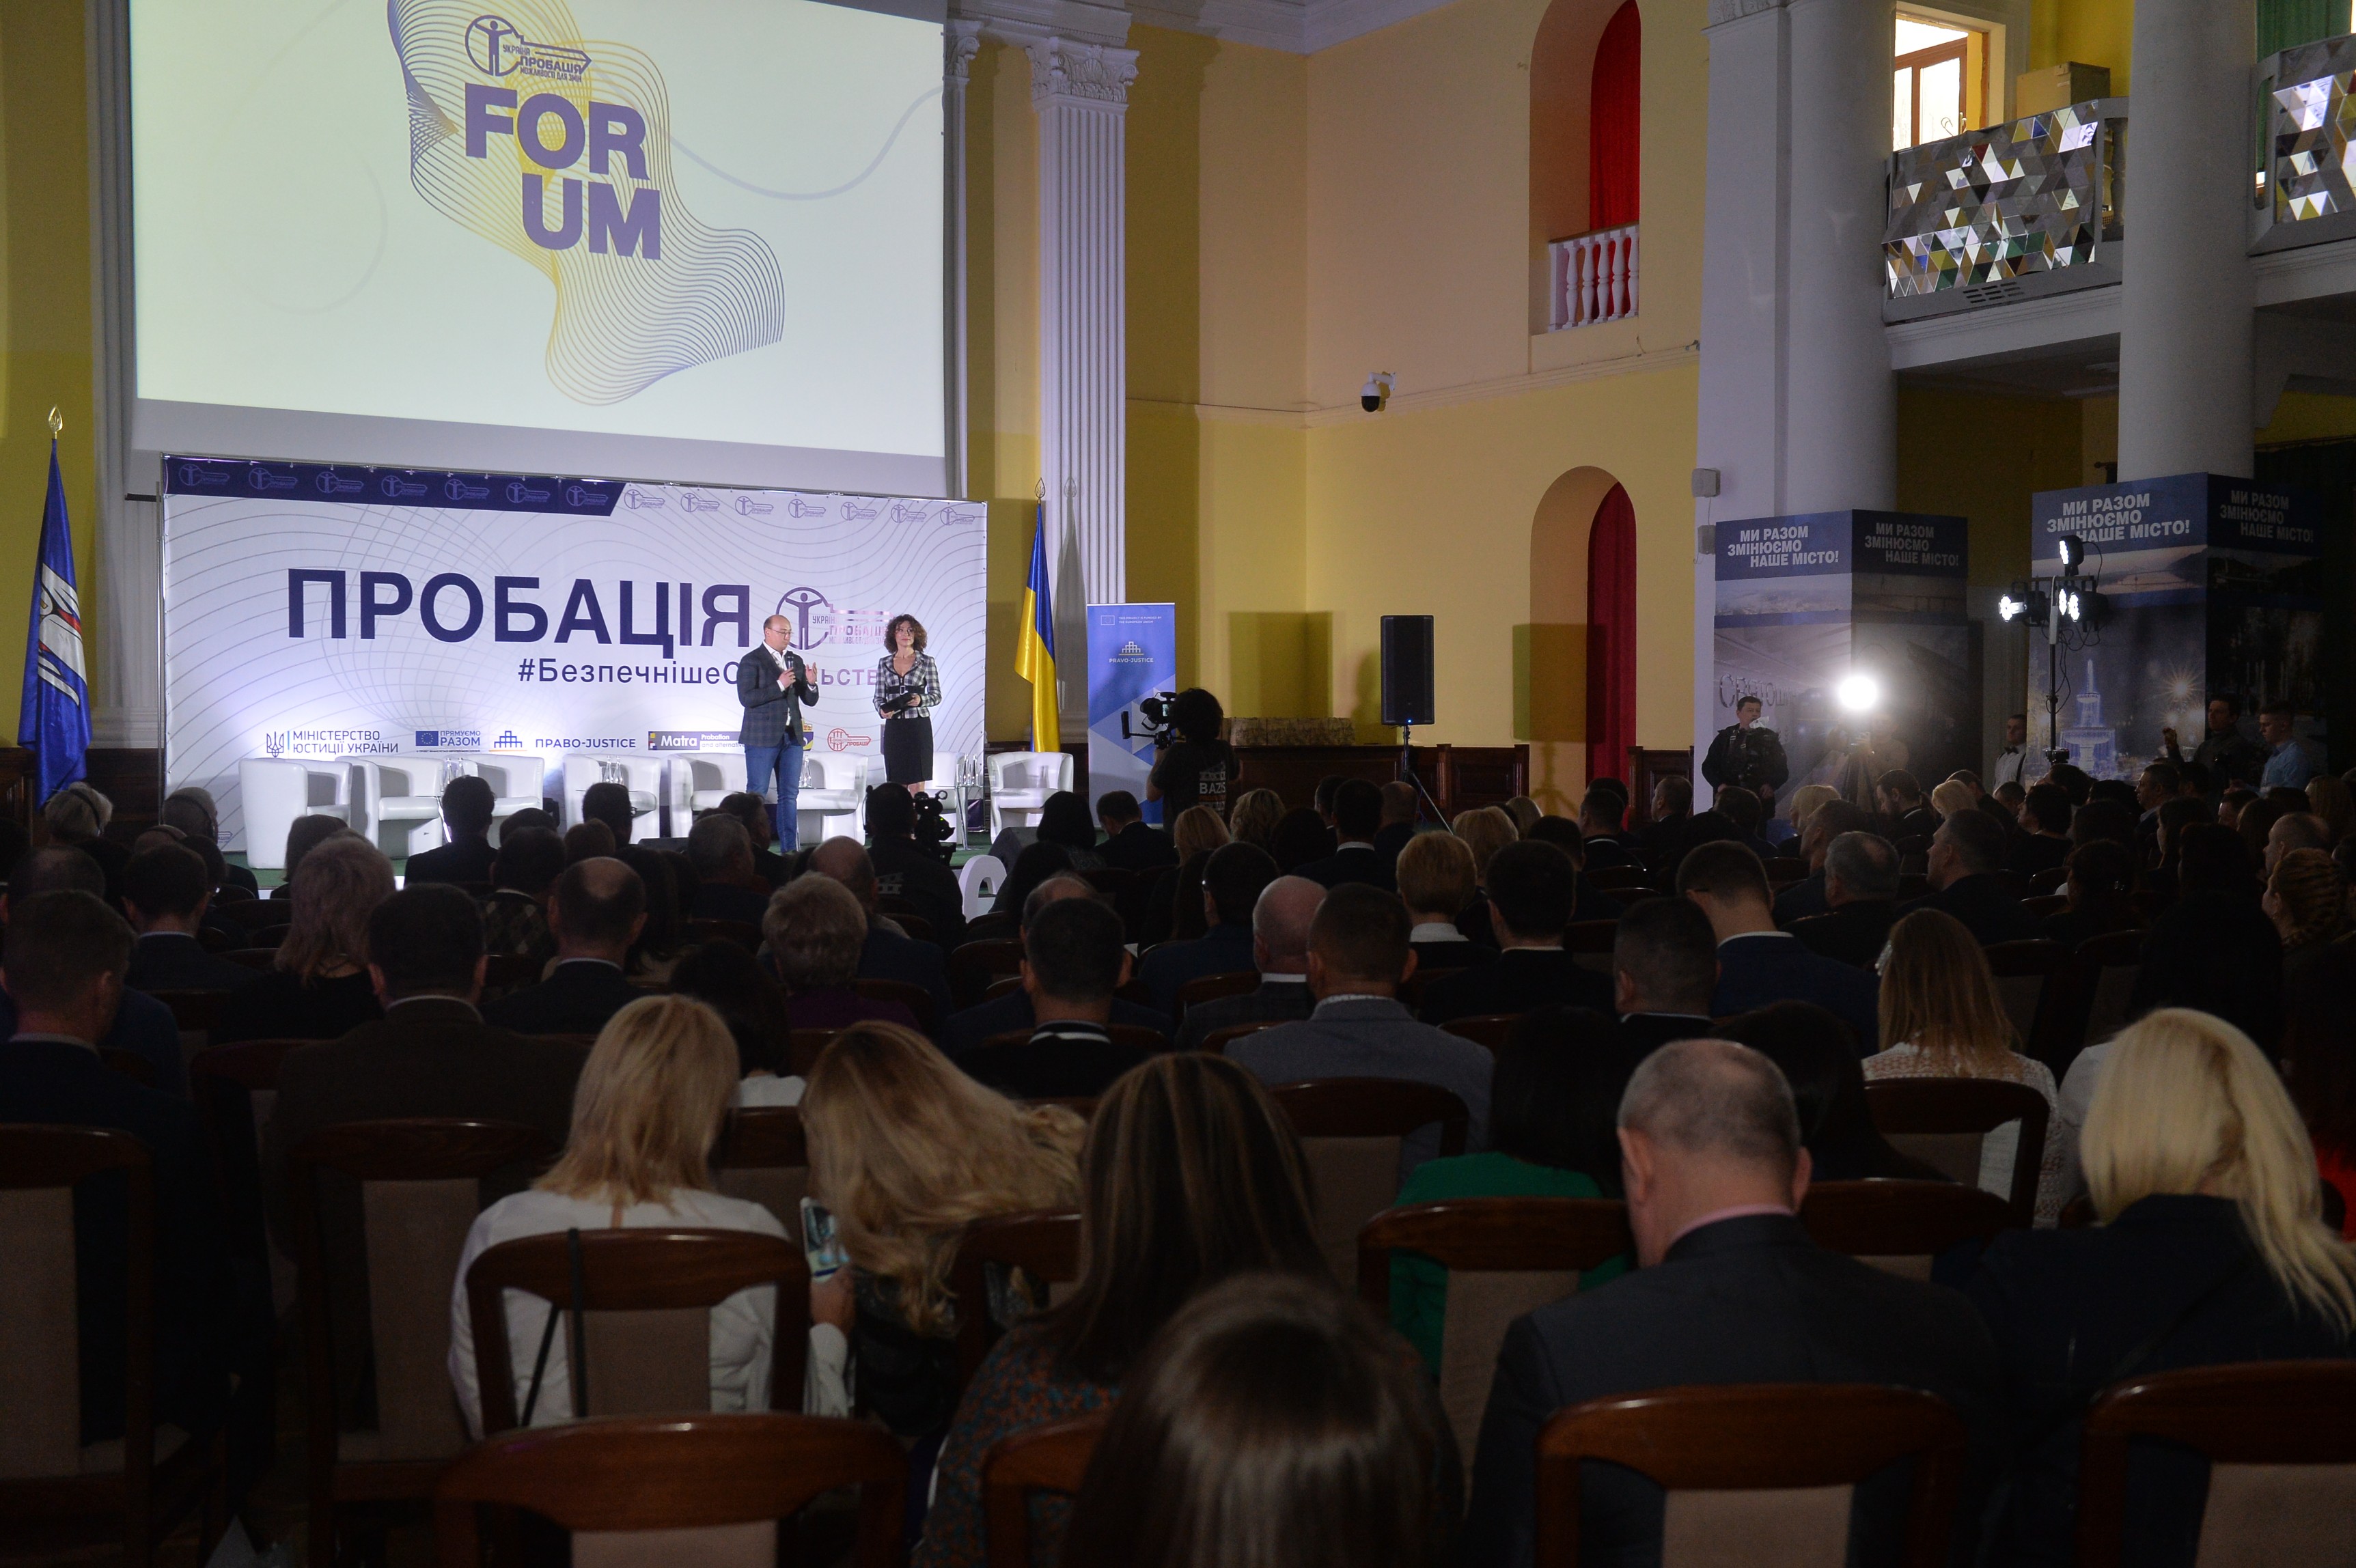 EU supports probation reform in Ukraine in line with European standards